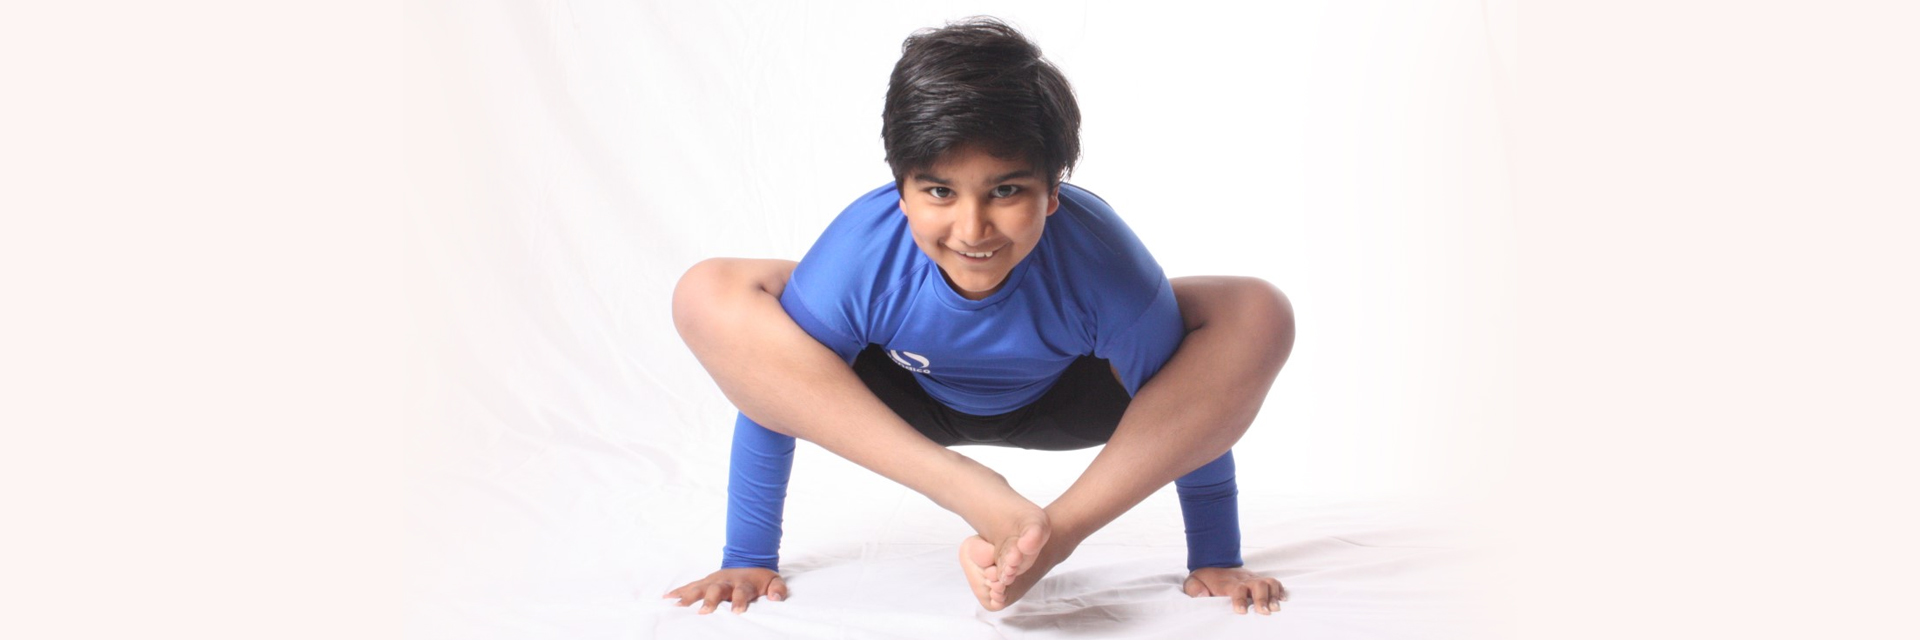 Yoga ambassador to the world: Brit-Indian boy teacher Ishwar Sharma’s acro asanas help spread calmness